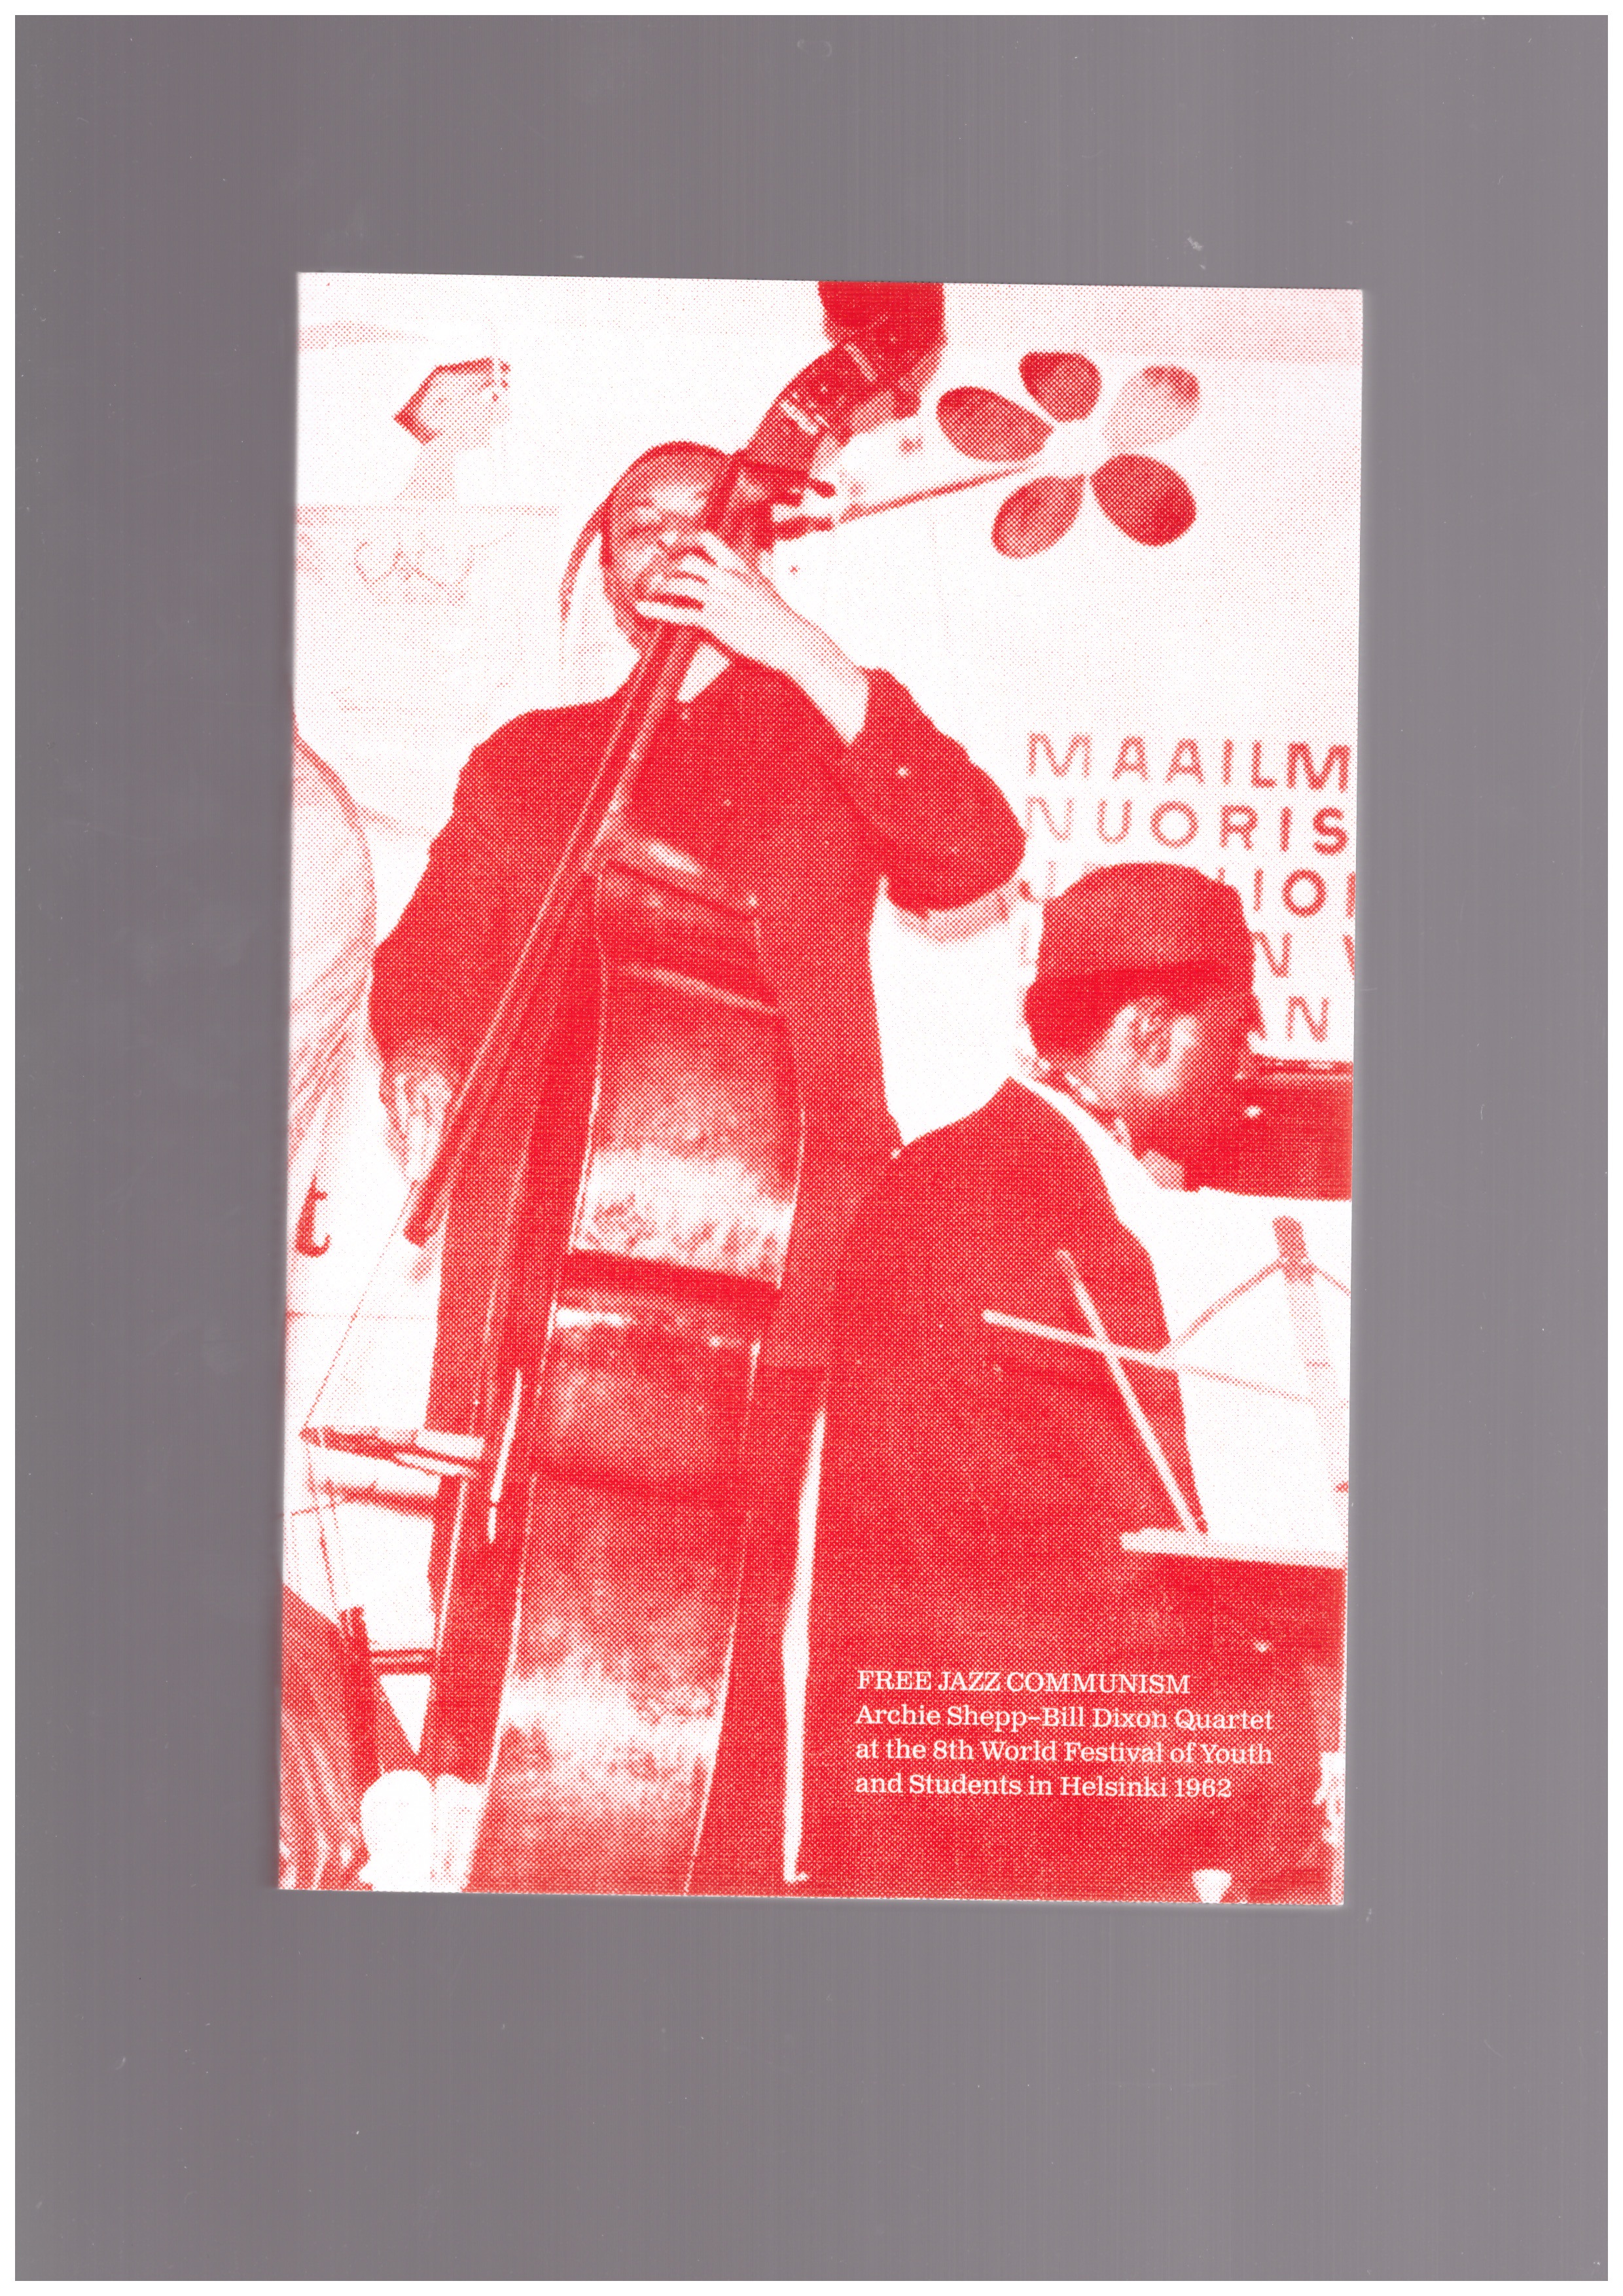 BOYNIK, Sezgin; VIITAHUHTA, Taneli (eds.) - Free Jazz Communism